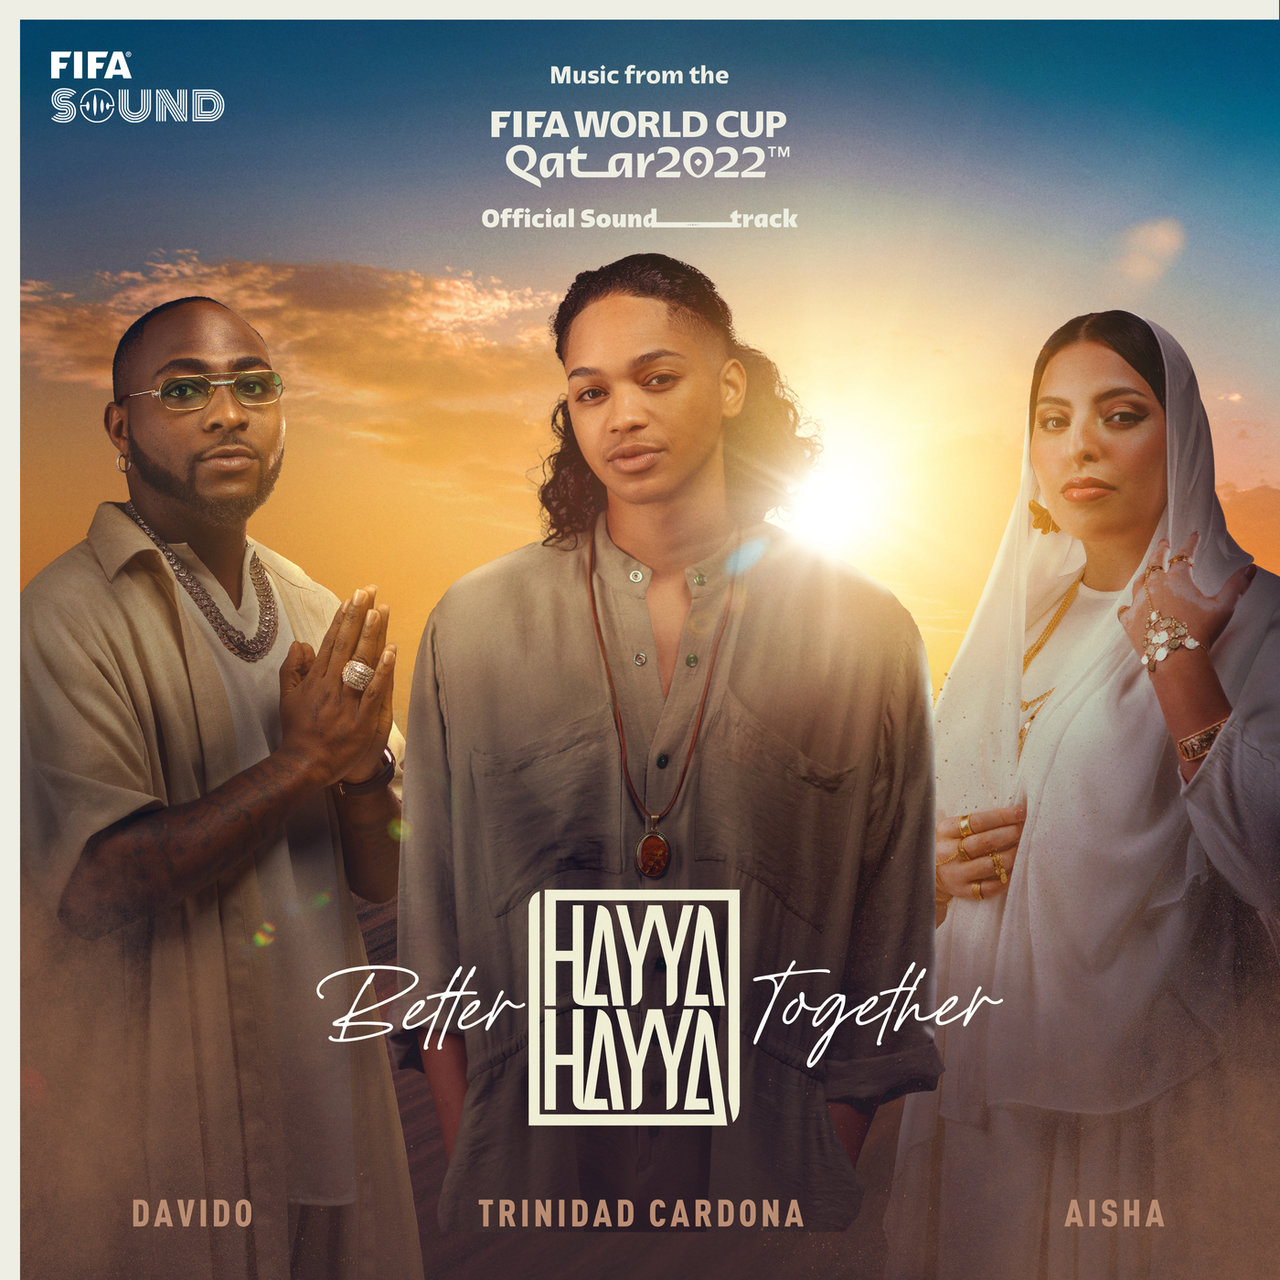 Trinidad Cardona, DaVido, & Aisha Hayya Hayya (Better Together) cover artwork